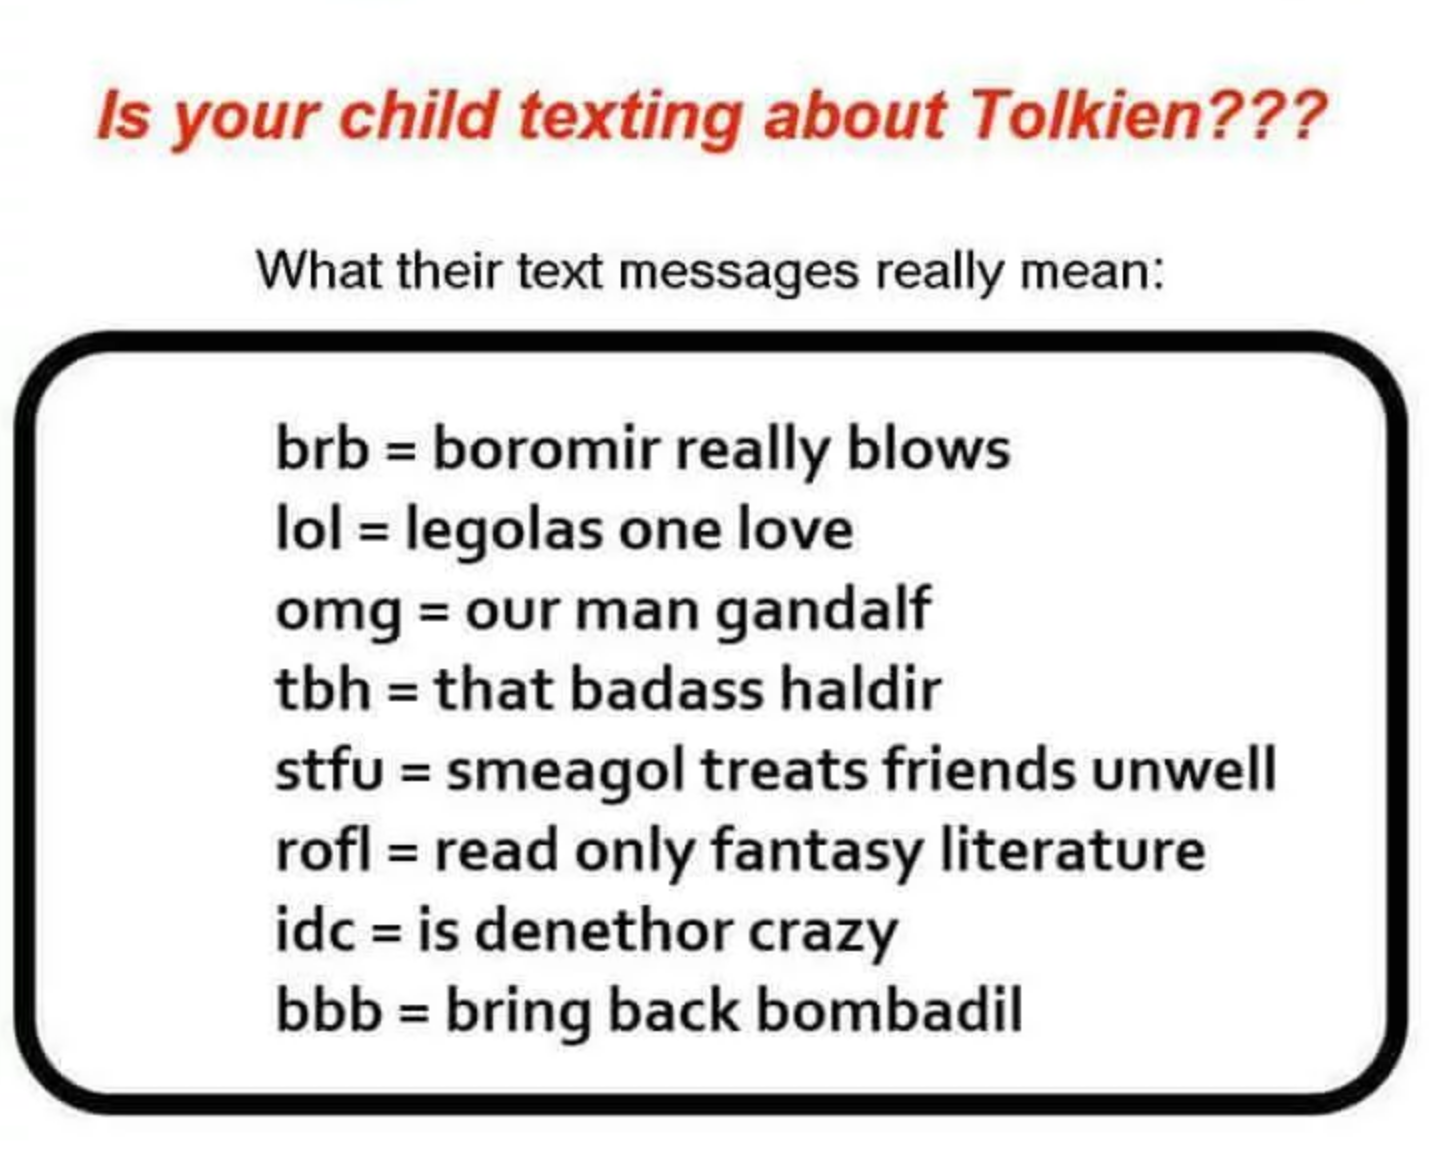 lotr meme - your child texting about tolkien - Is your child texting about Tolkien??? What their text messages really mean brb boromir really blows lol legolas one love omg our man gandalf tbh that badass haldir stfu smeagol treats friends unwell rofl rea